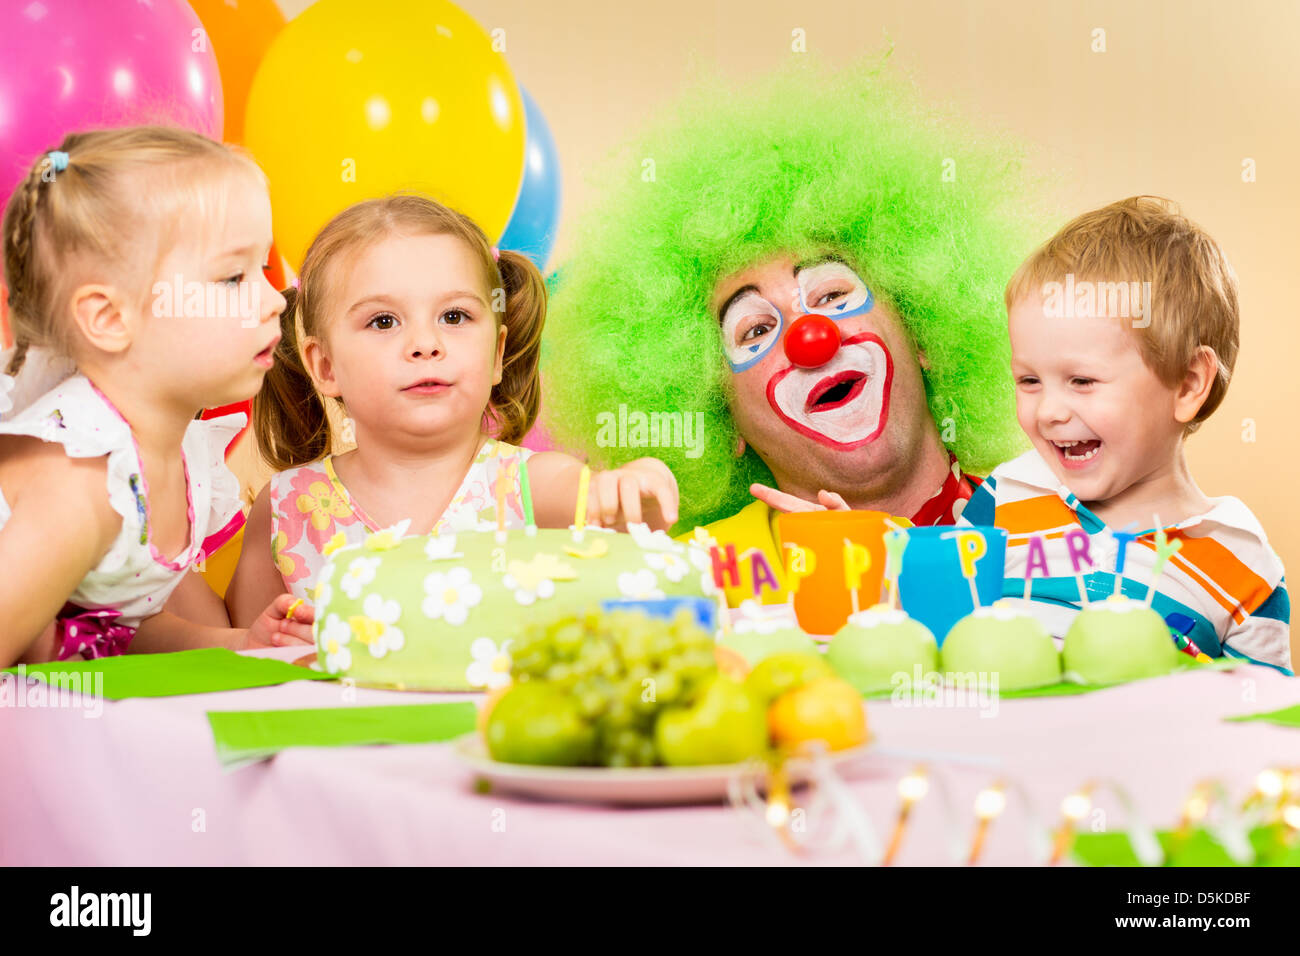 kids celebrating birthday party with clown Stock Photo